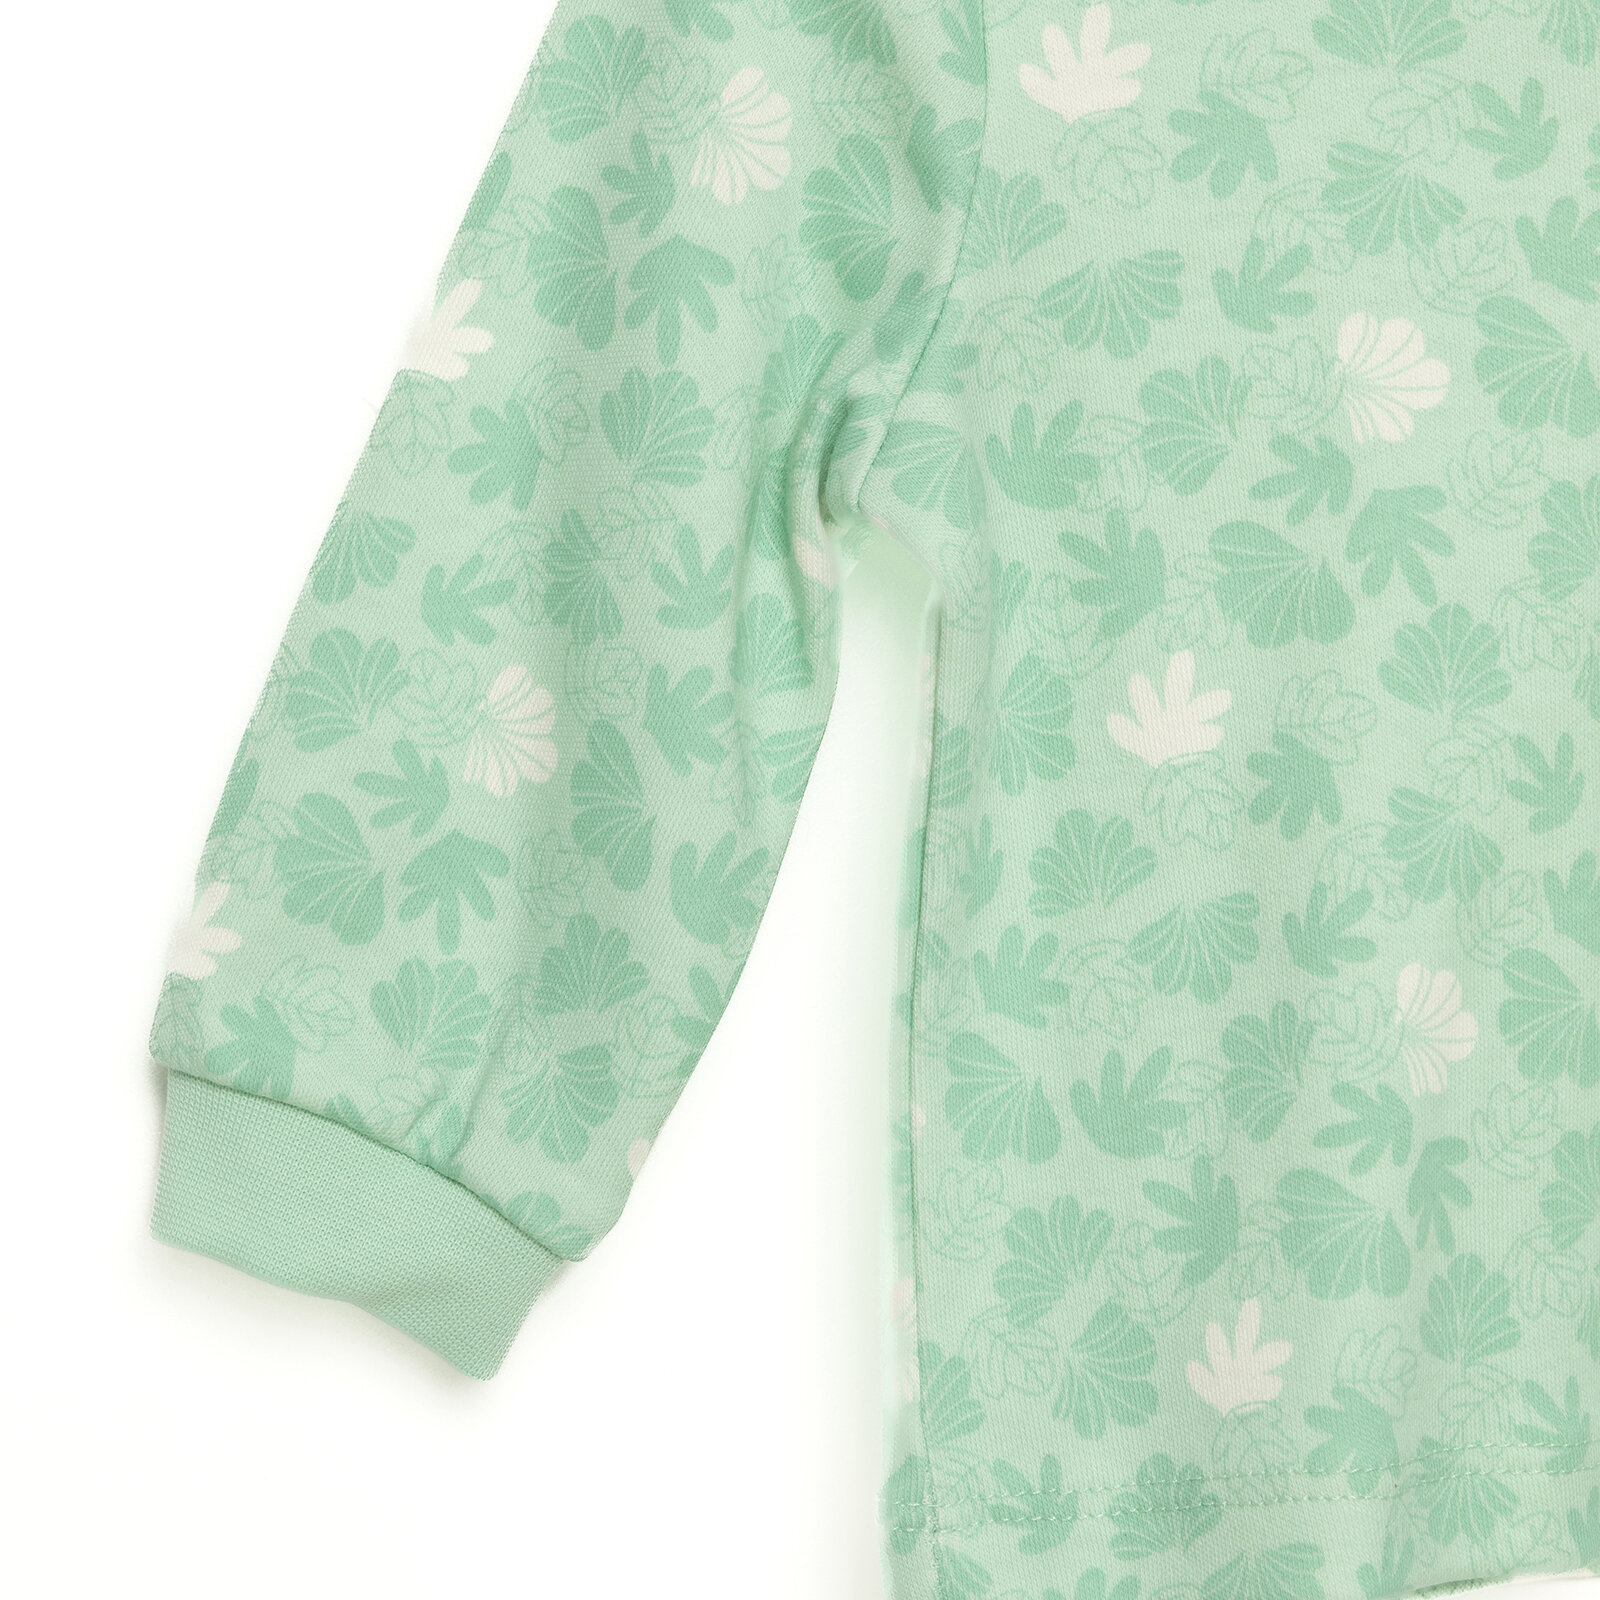 Pijama Takımı Kız Bebek